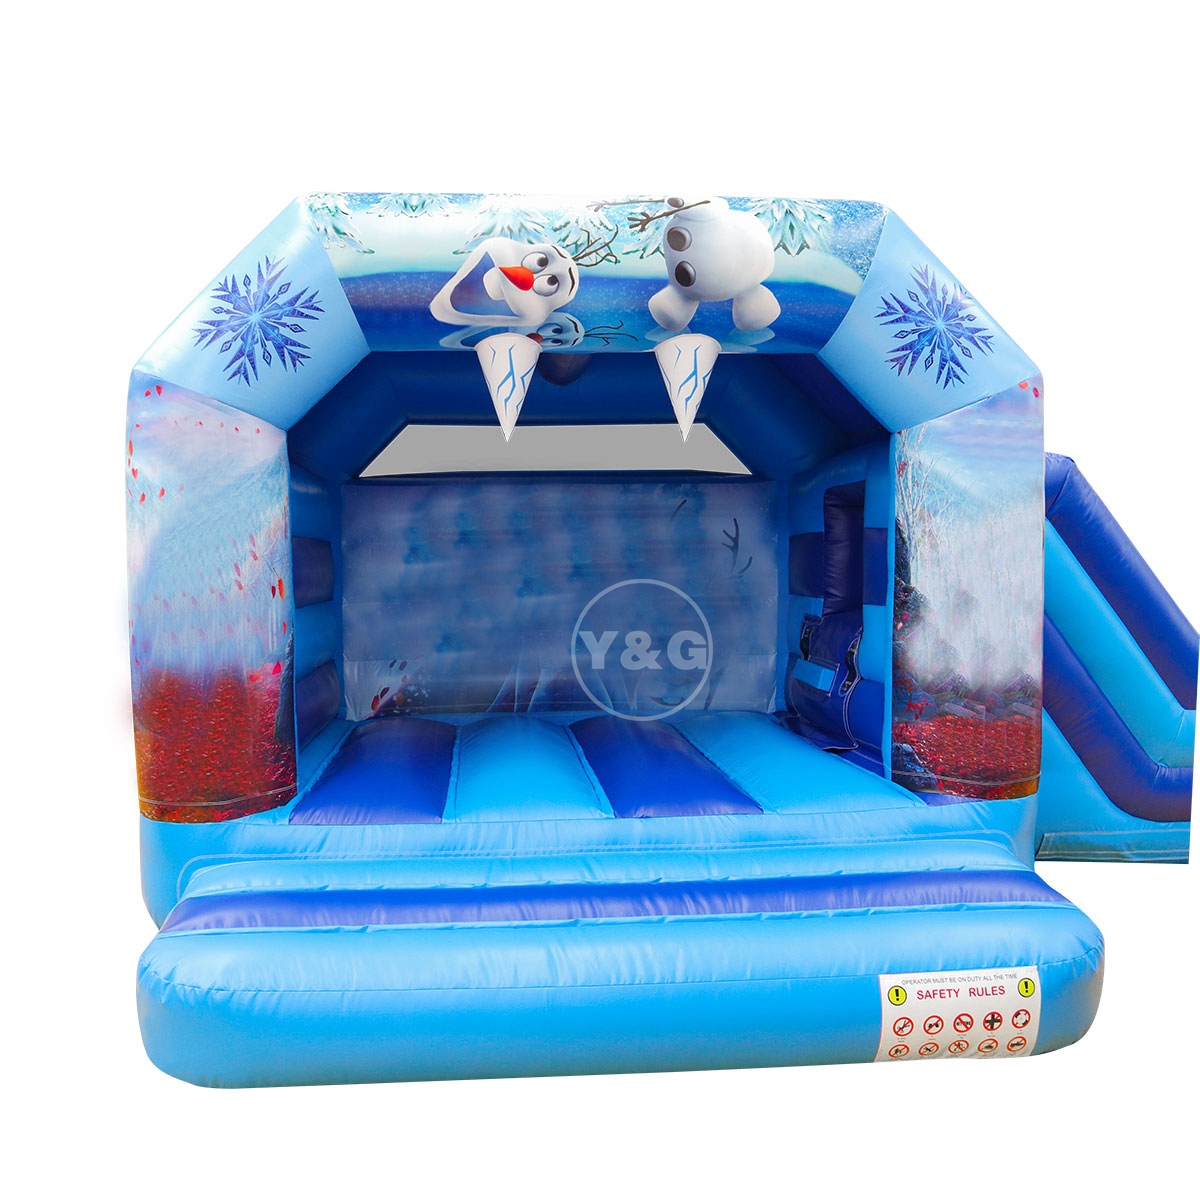 Frozen inflatable bouncer slideYG-122